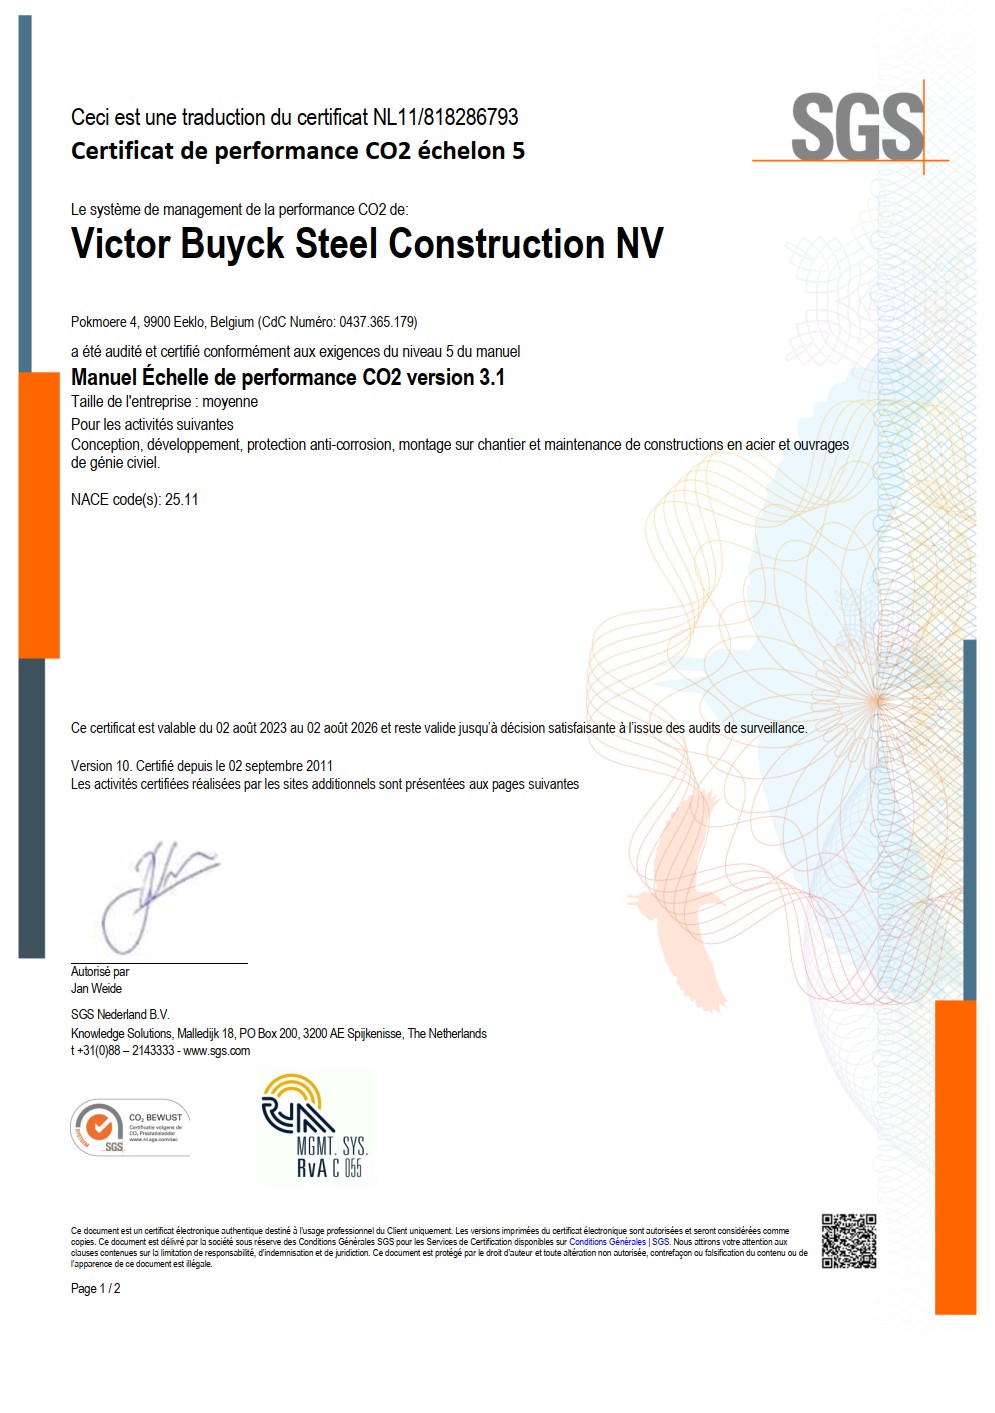 Victor Buyck Steel Construction - Échelle de performance CO2 niveau 5 (FR).jpg